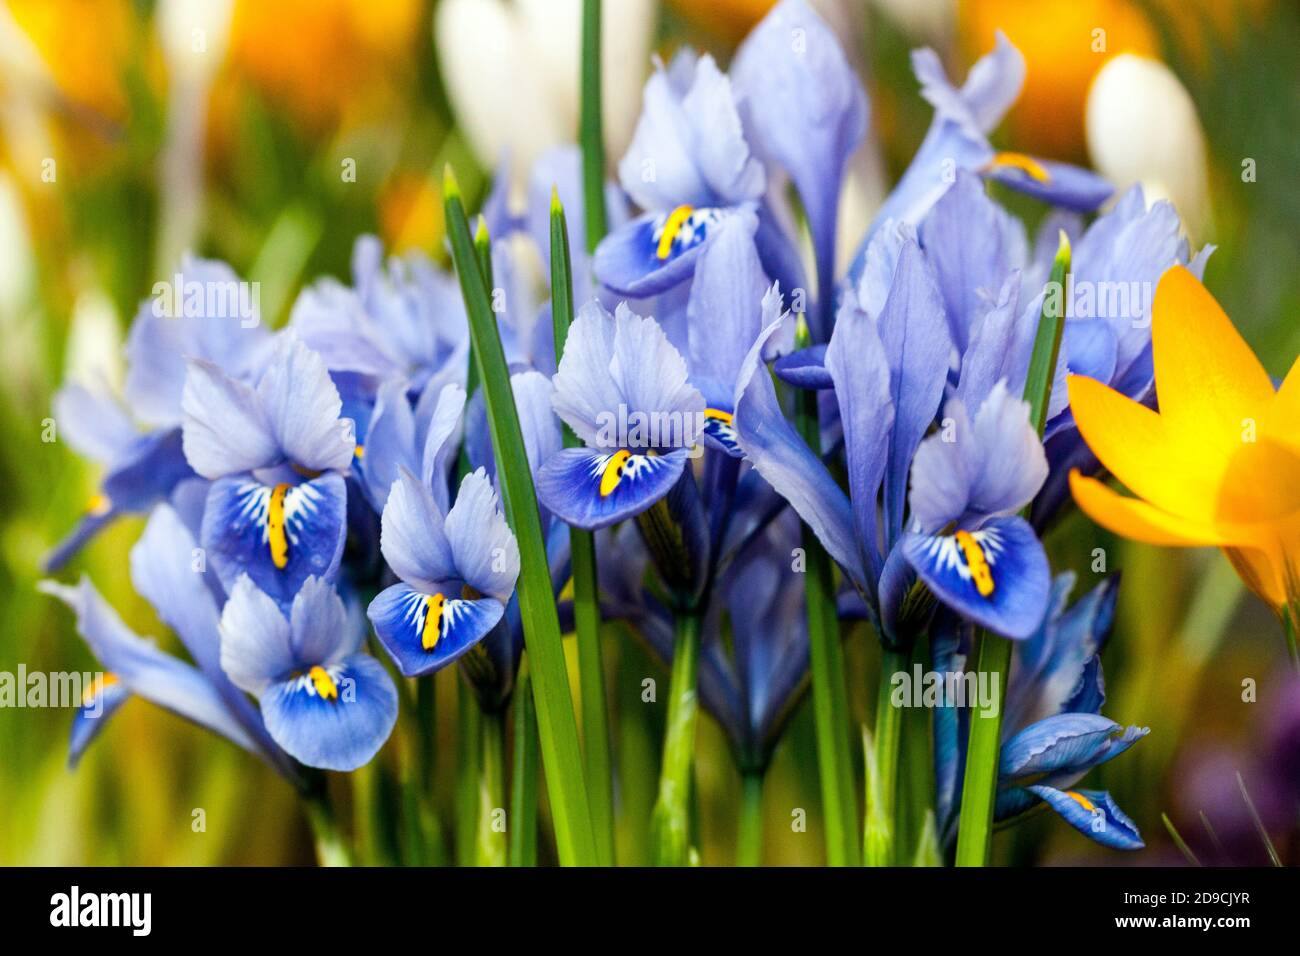 Blue iris flower and Crocus, Spring garden flowers in March Stock Photo